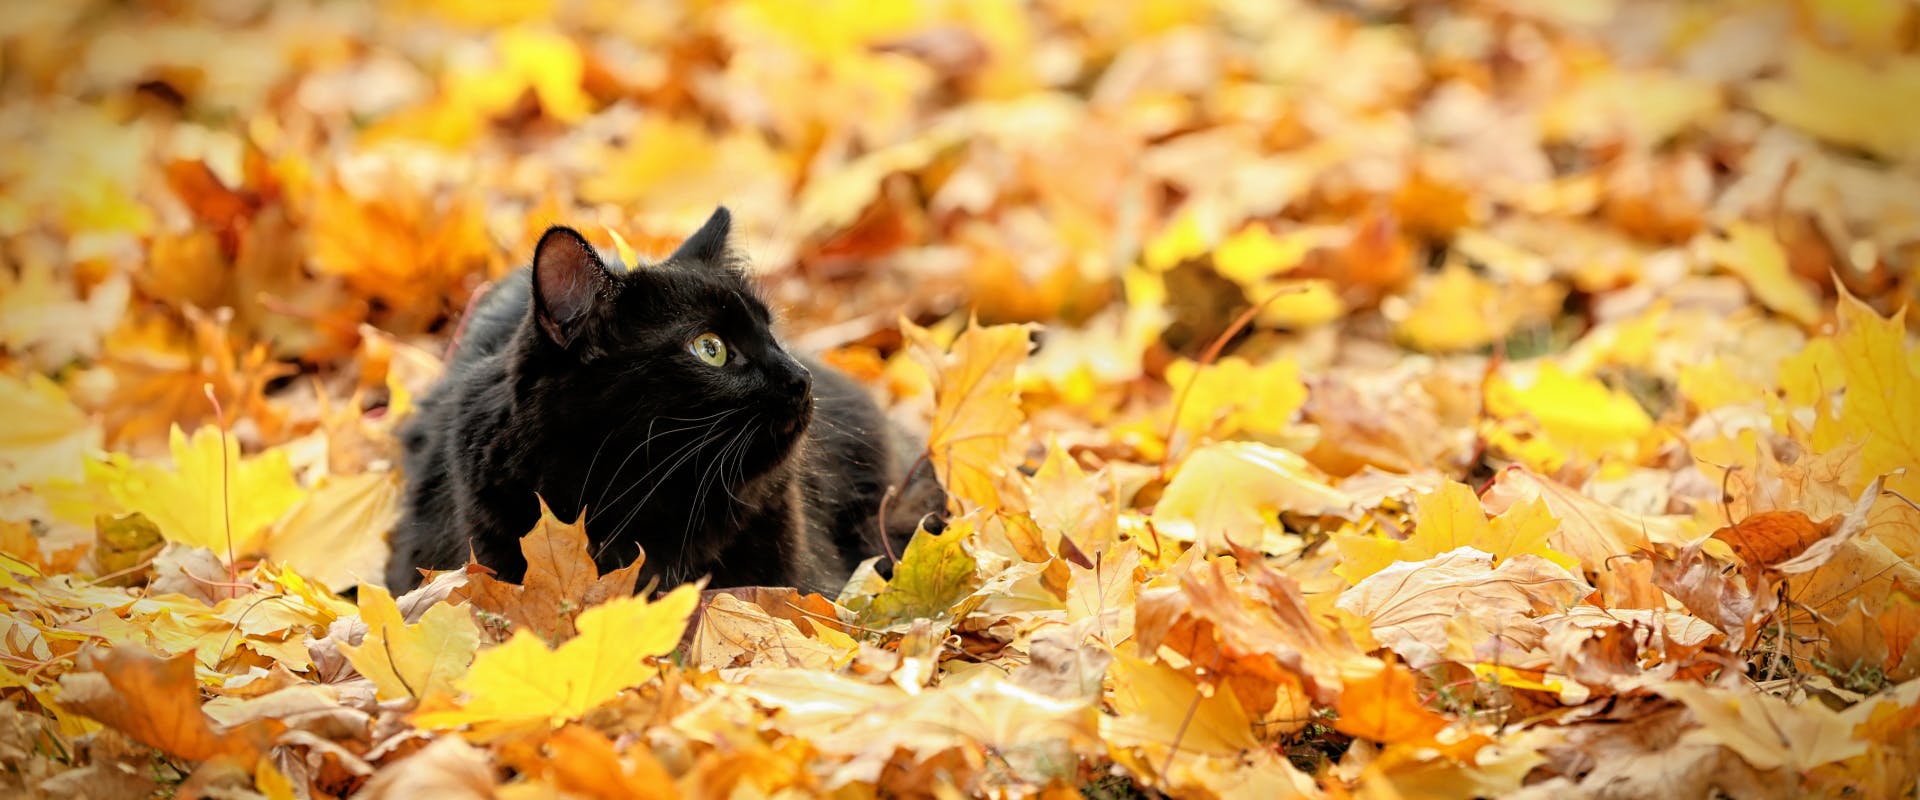 A black cat amongst autumn leaves.